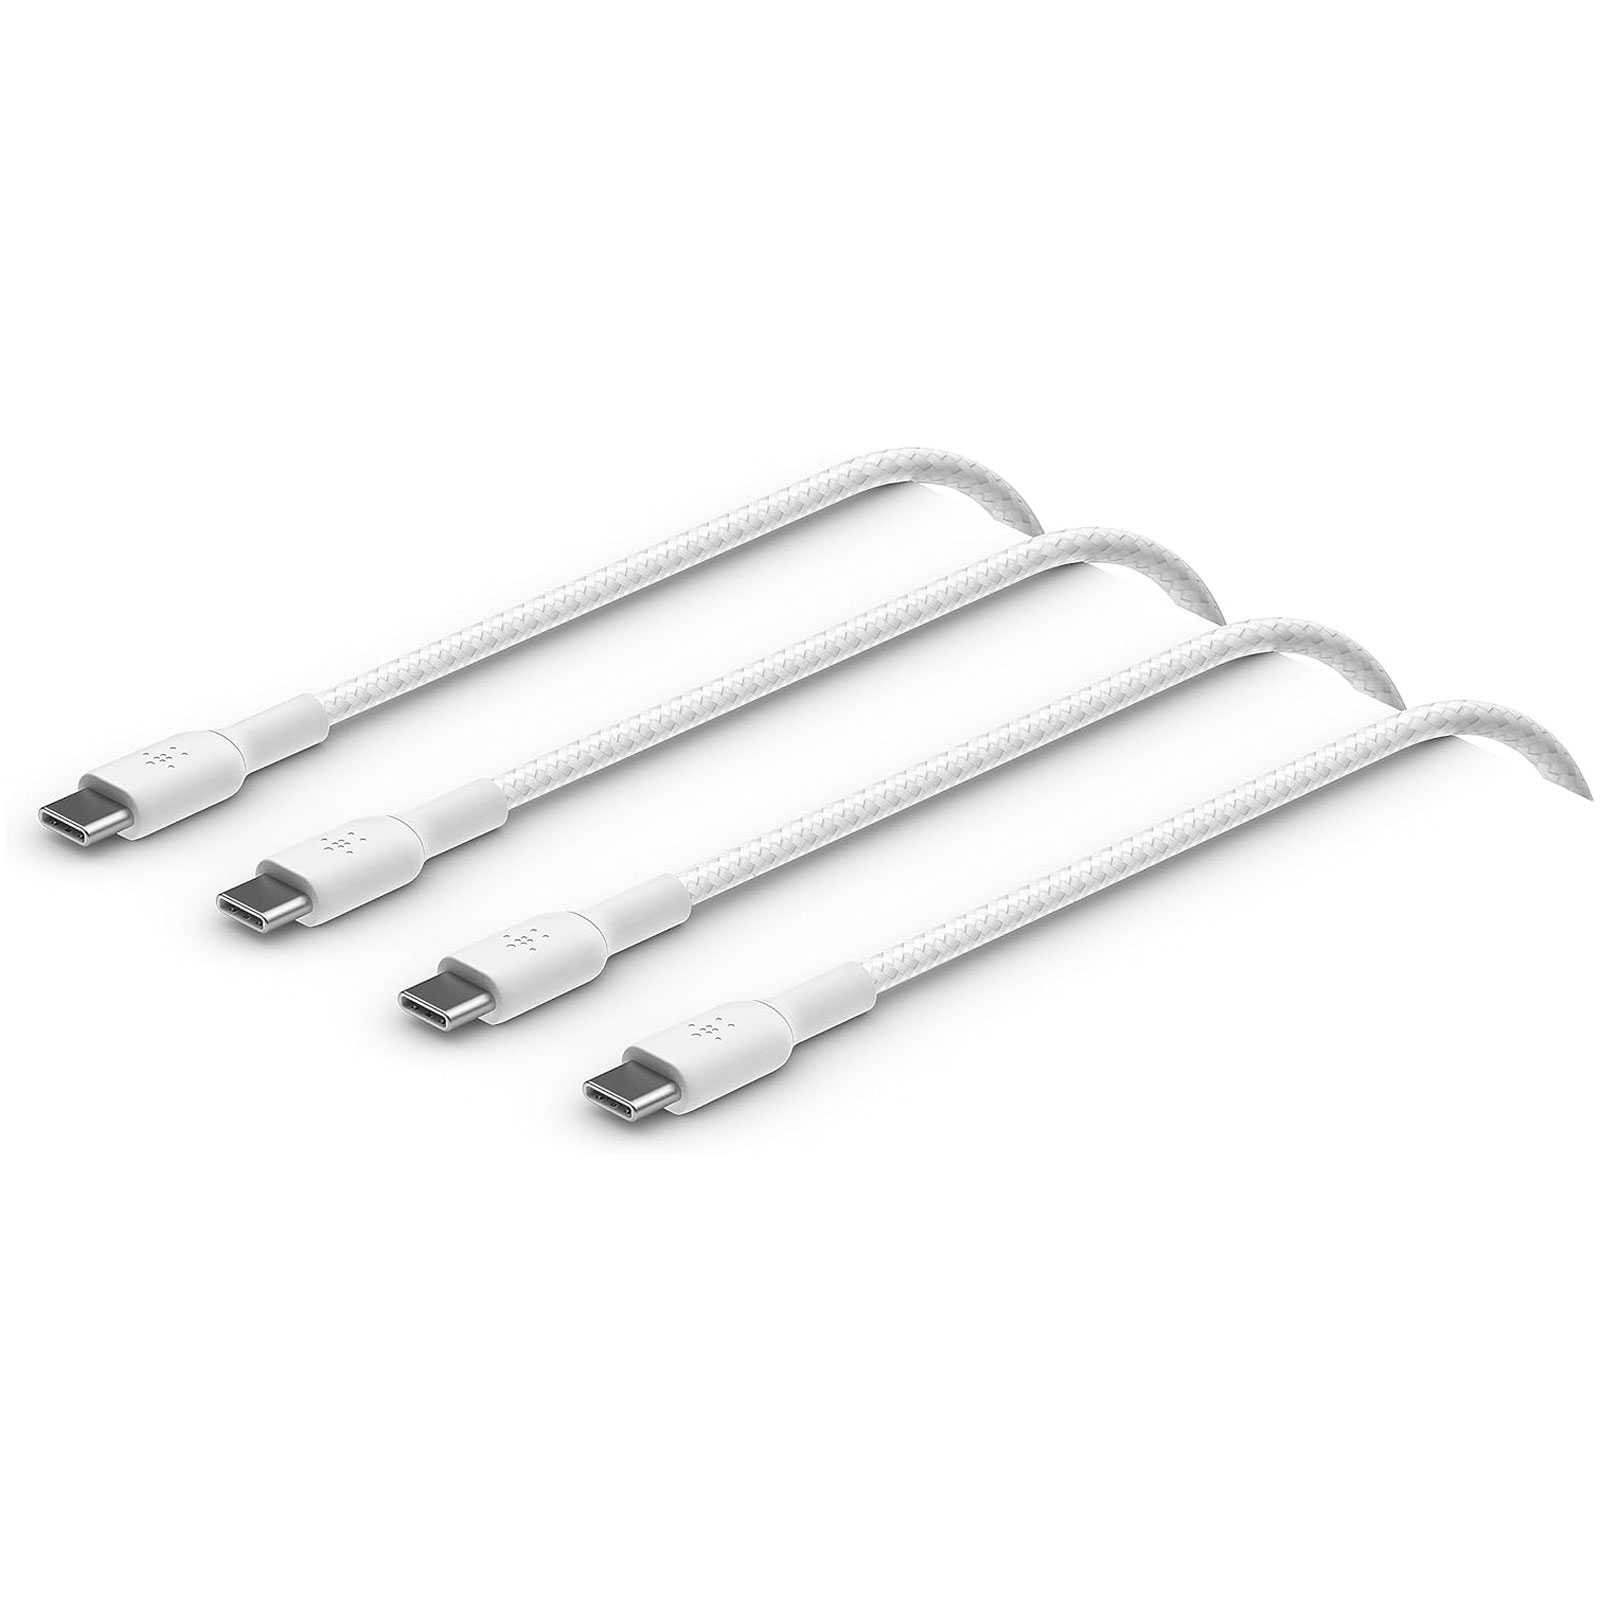 BELKIN Ladekabel, USB-C auf USB-C, 2er Pack, 1 m, Weiß